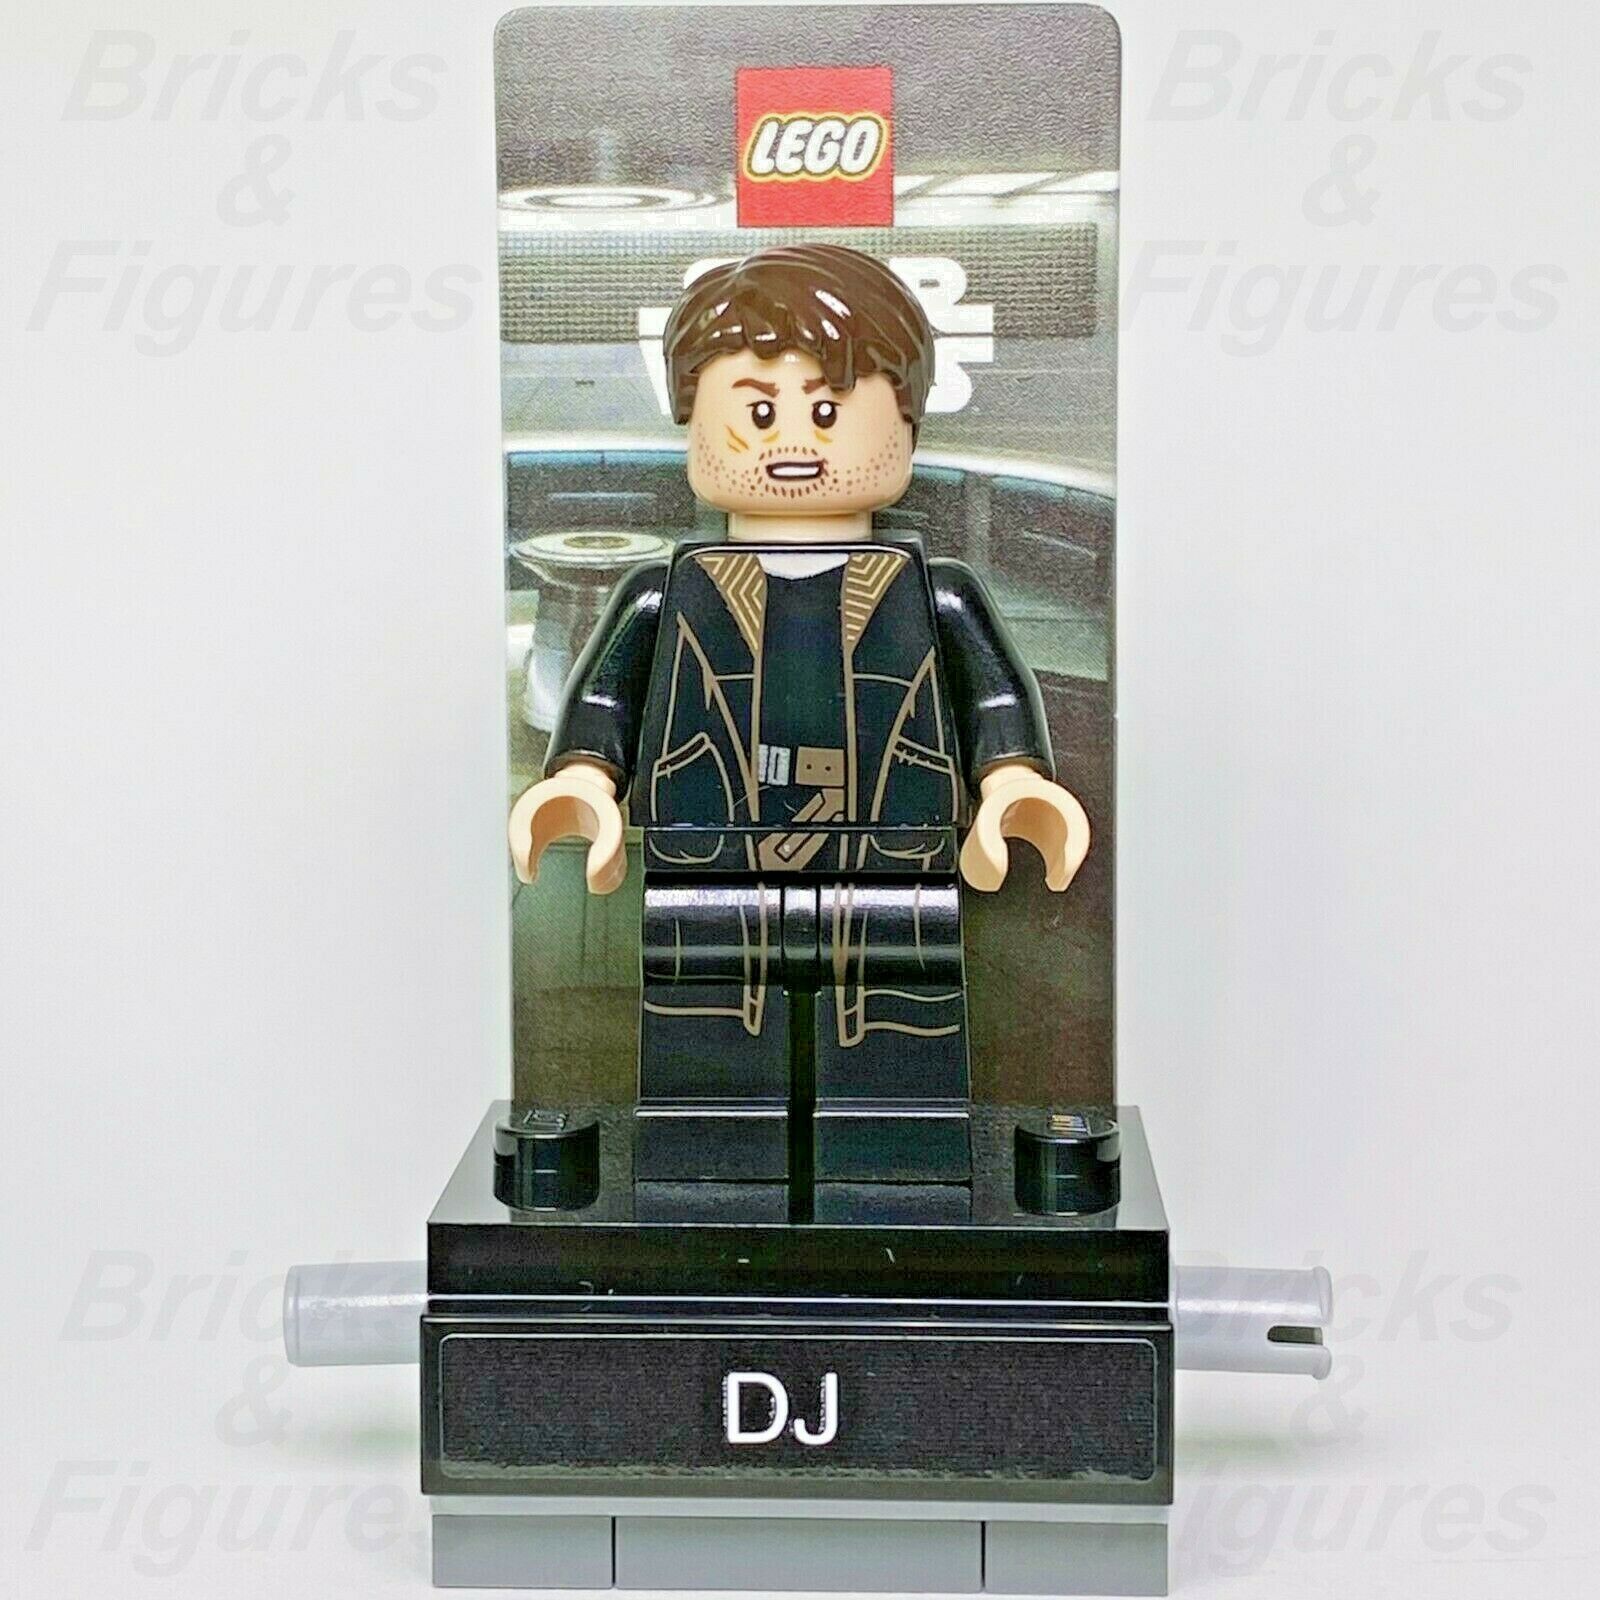 New Star Wars LEGO DJ Code Breaker Promotional Minifigure Polybag 40298 sw0903 - Bricks & Figures